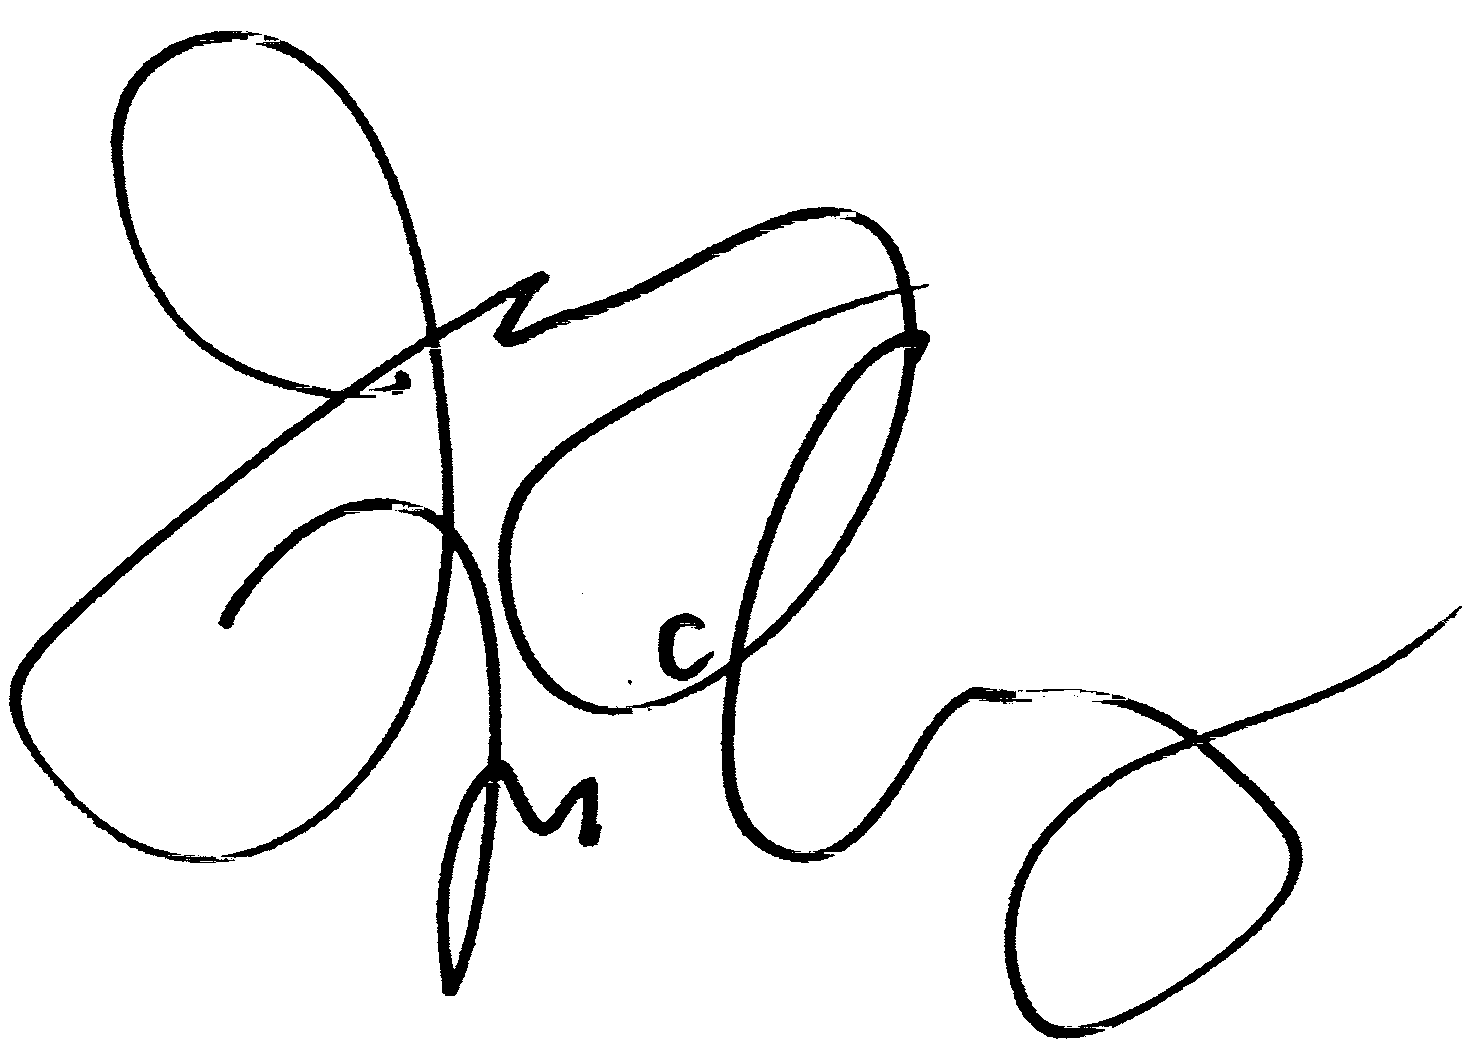 Jenny McCarthy autograph facsimile